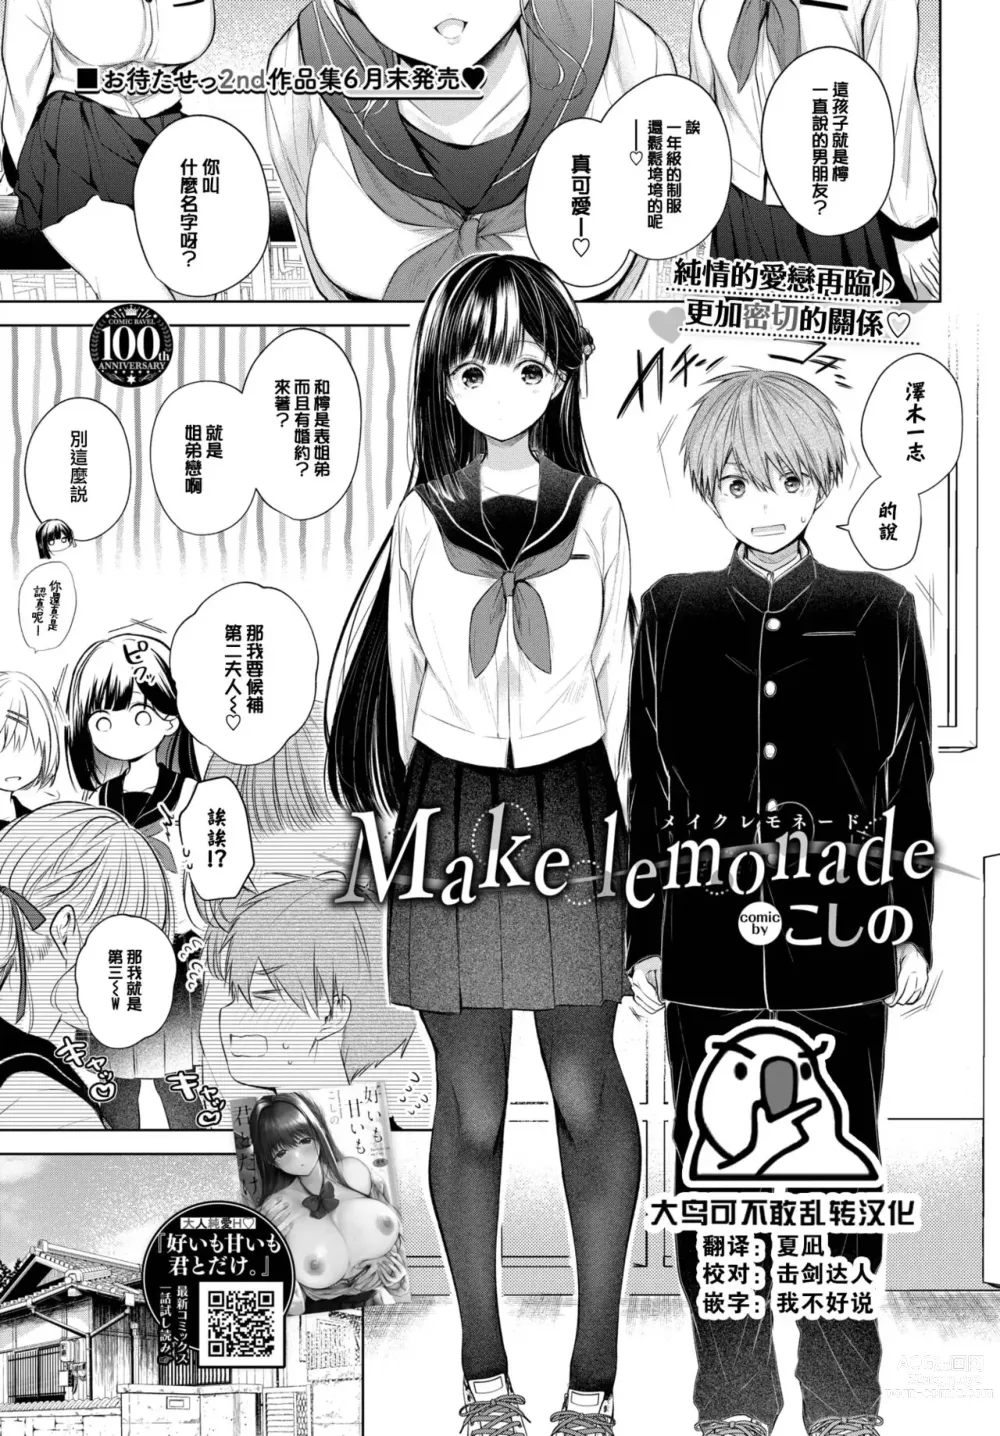 Page 1 of manga Make lemonade